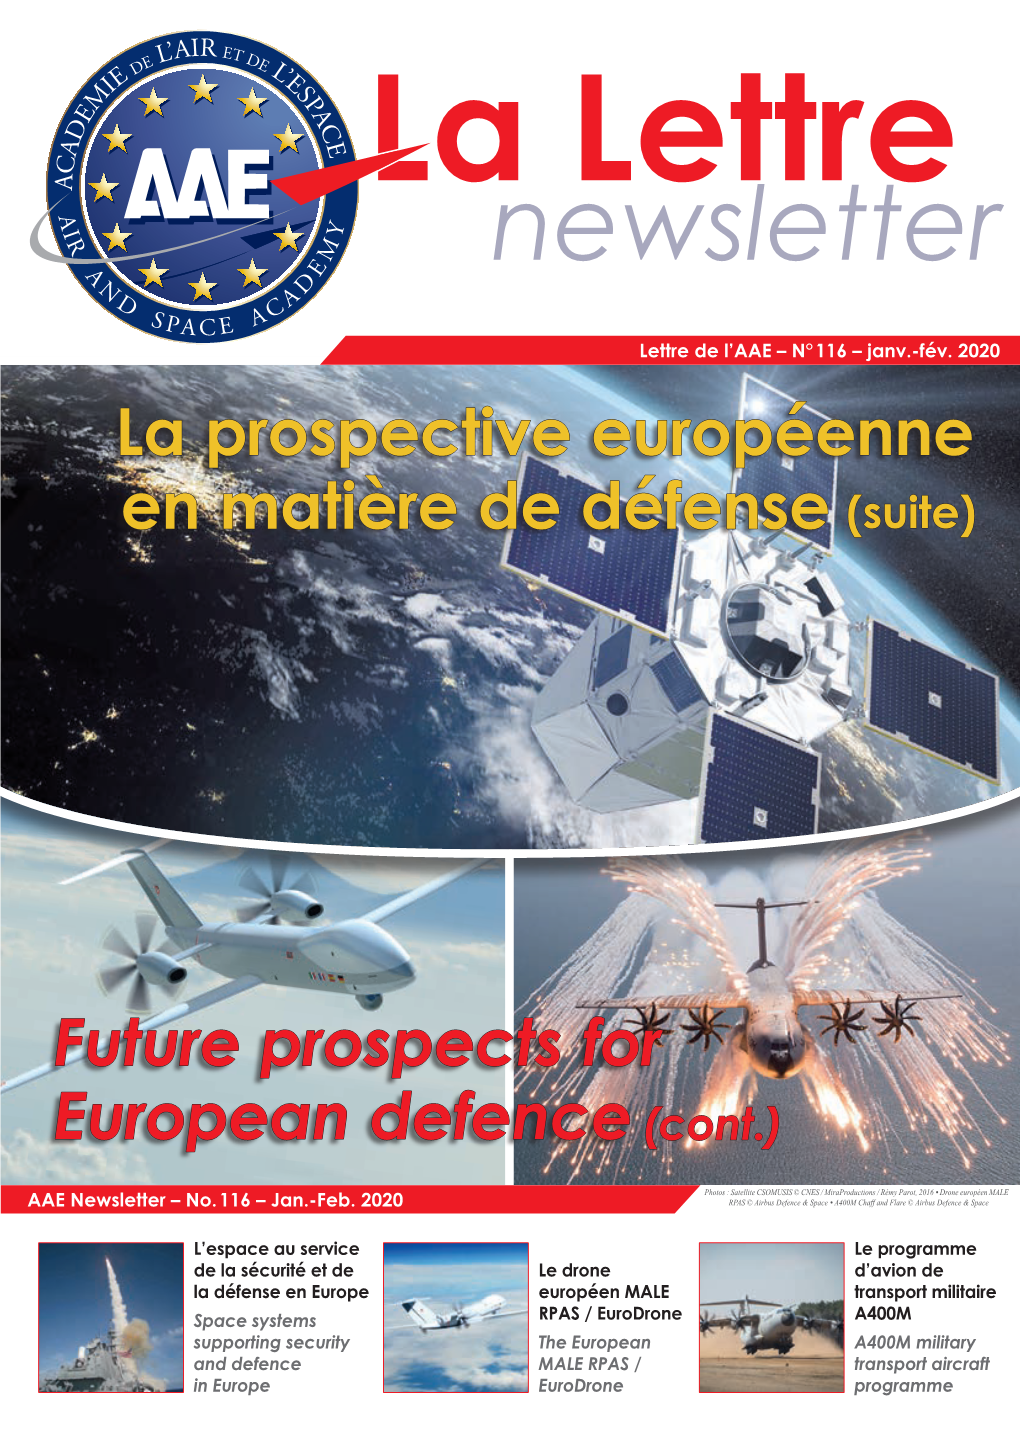 The European MALE RPAS / Eurodrone